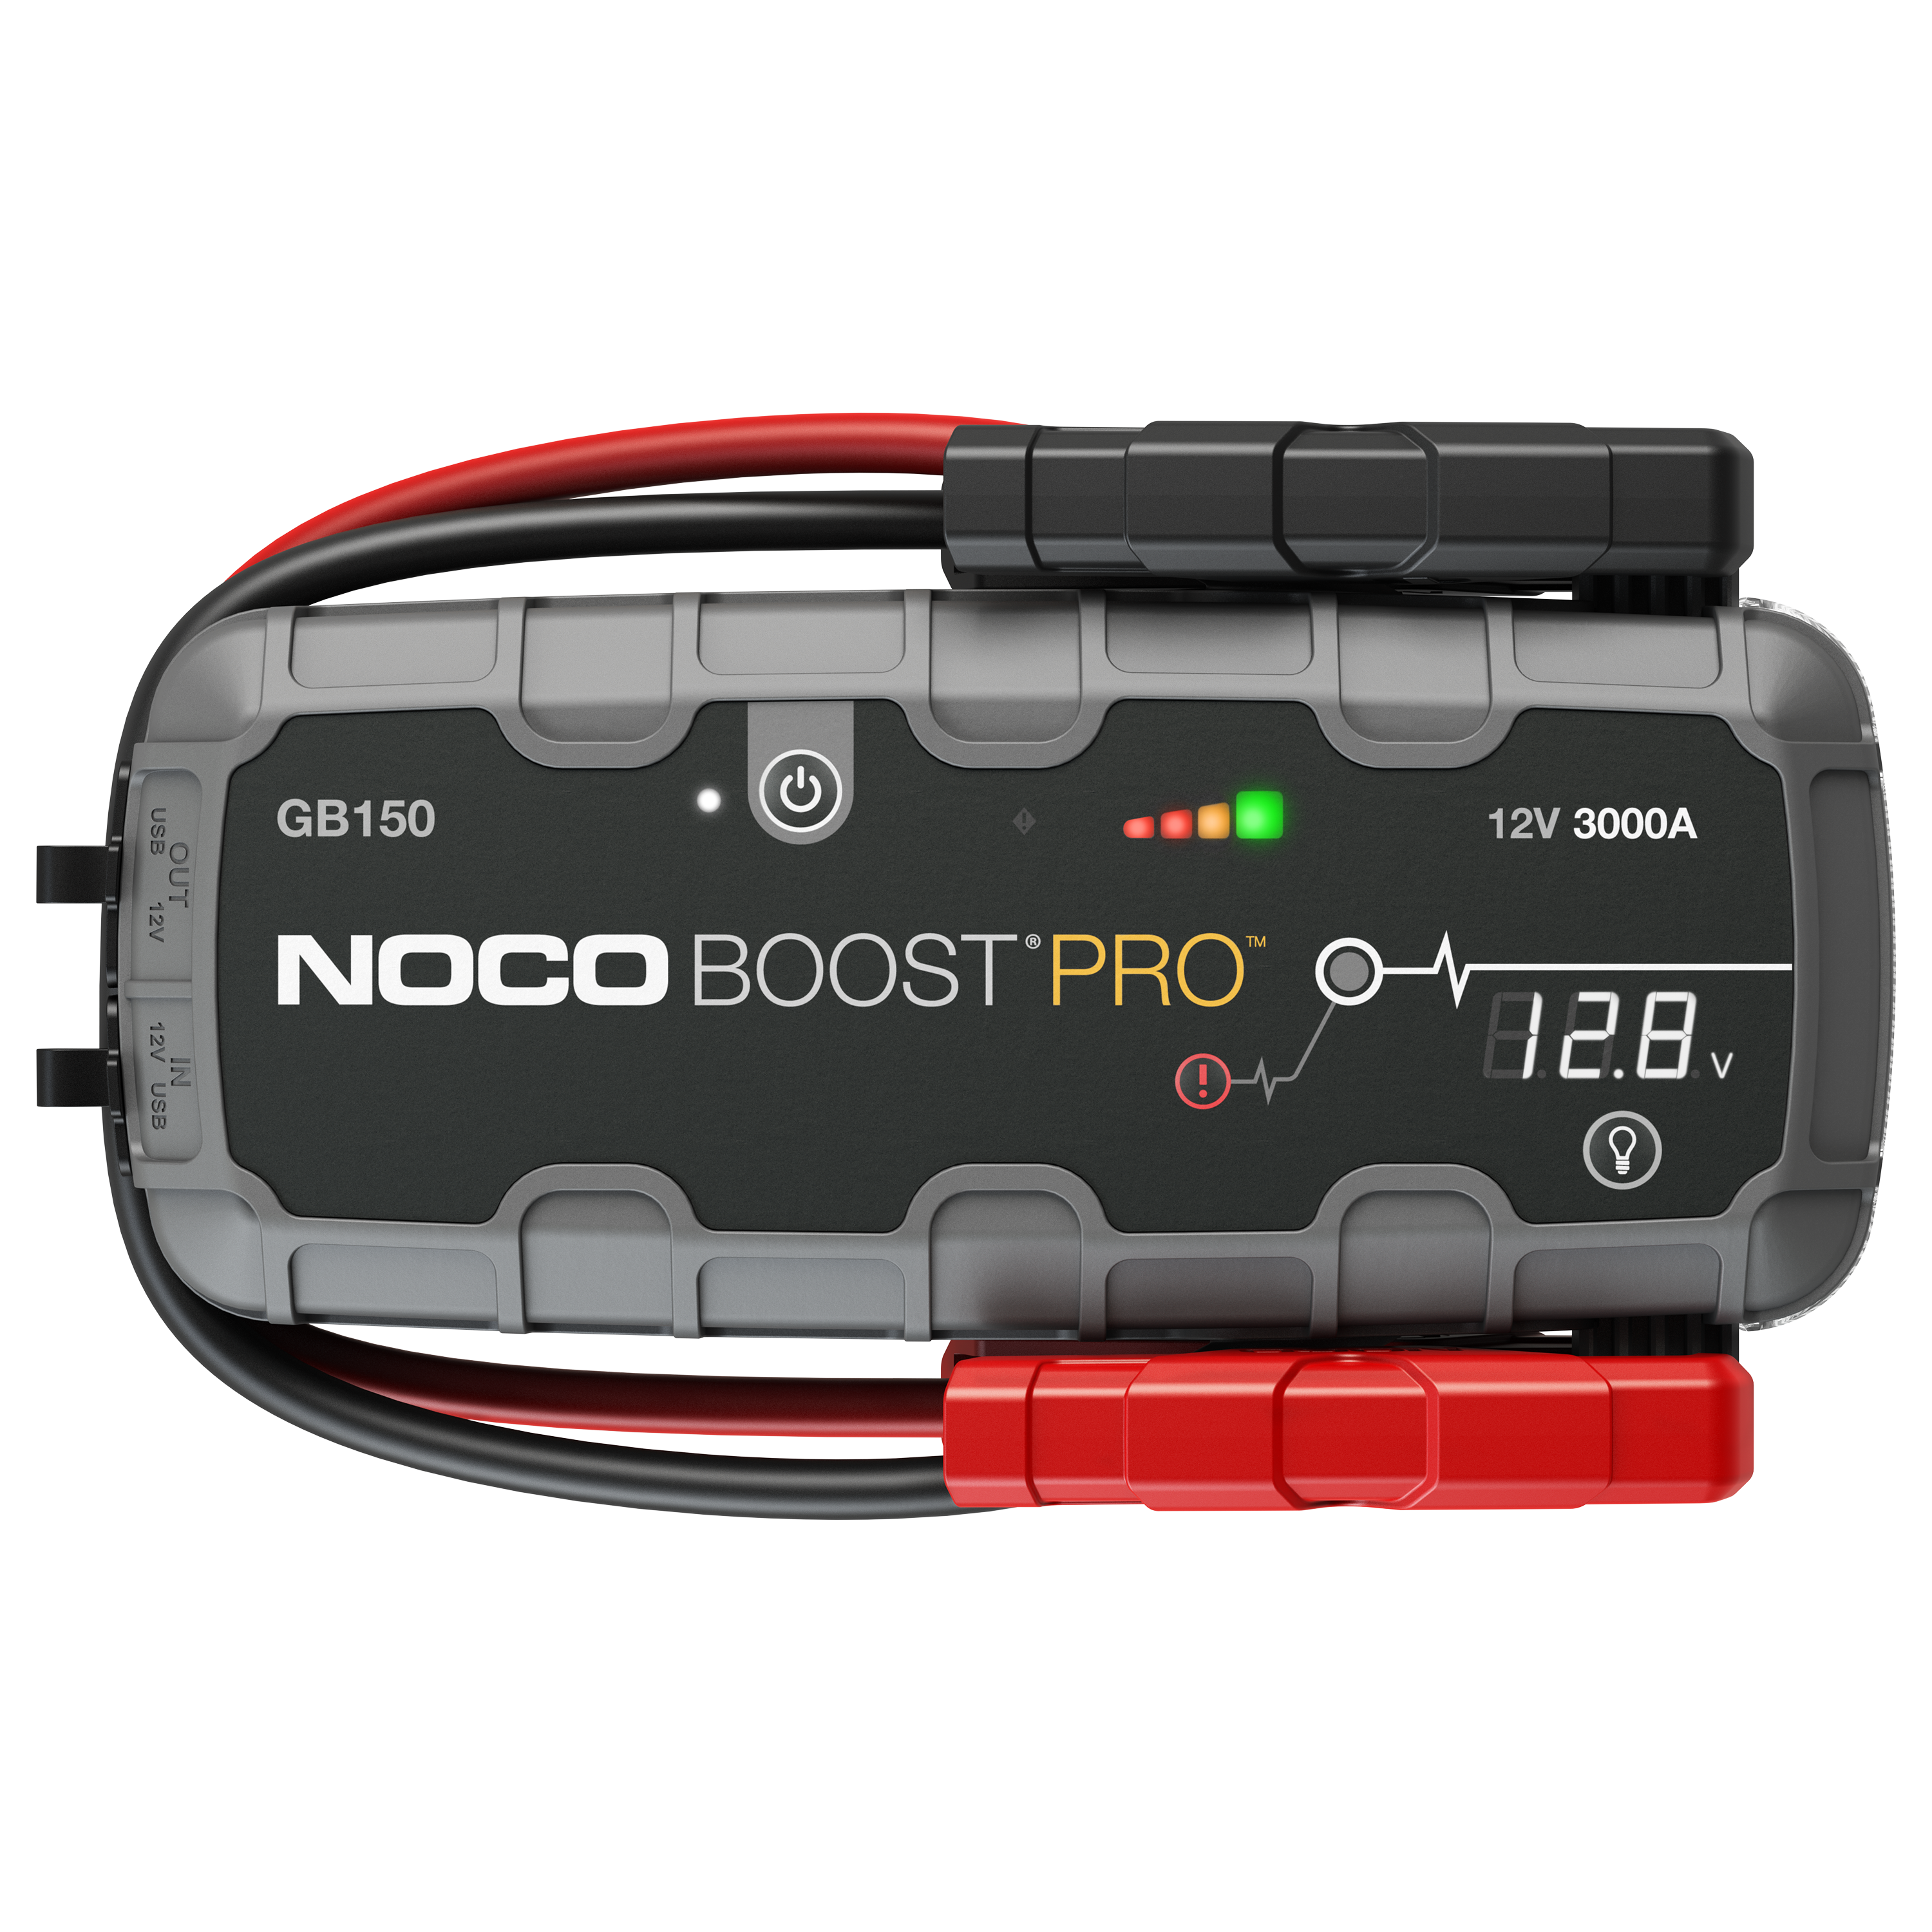 Noco Genius Boost Pro GB150 booster jumpstarter starthulp powerbank